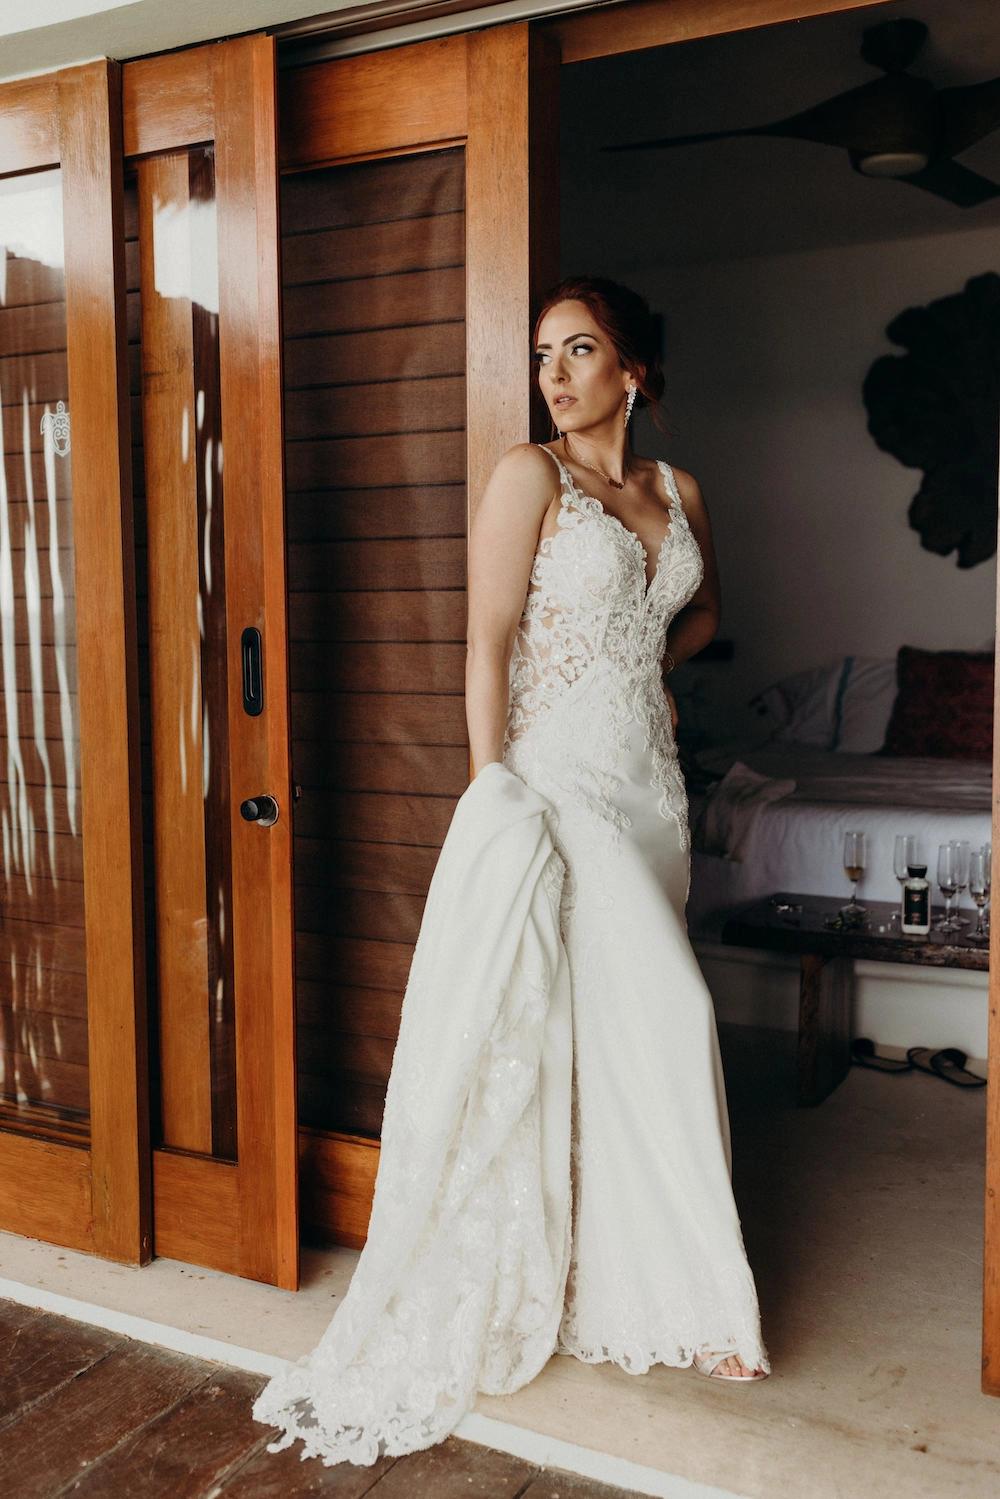 Nataly Marries in Beaded Lace Wedding Dress. Desktop Image